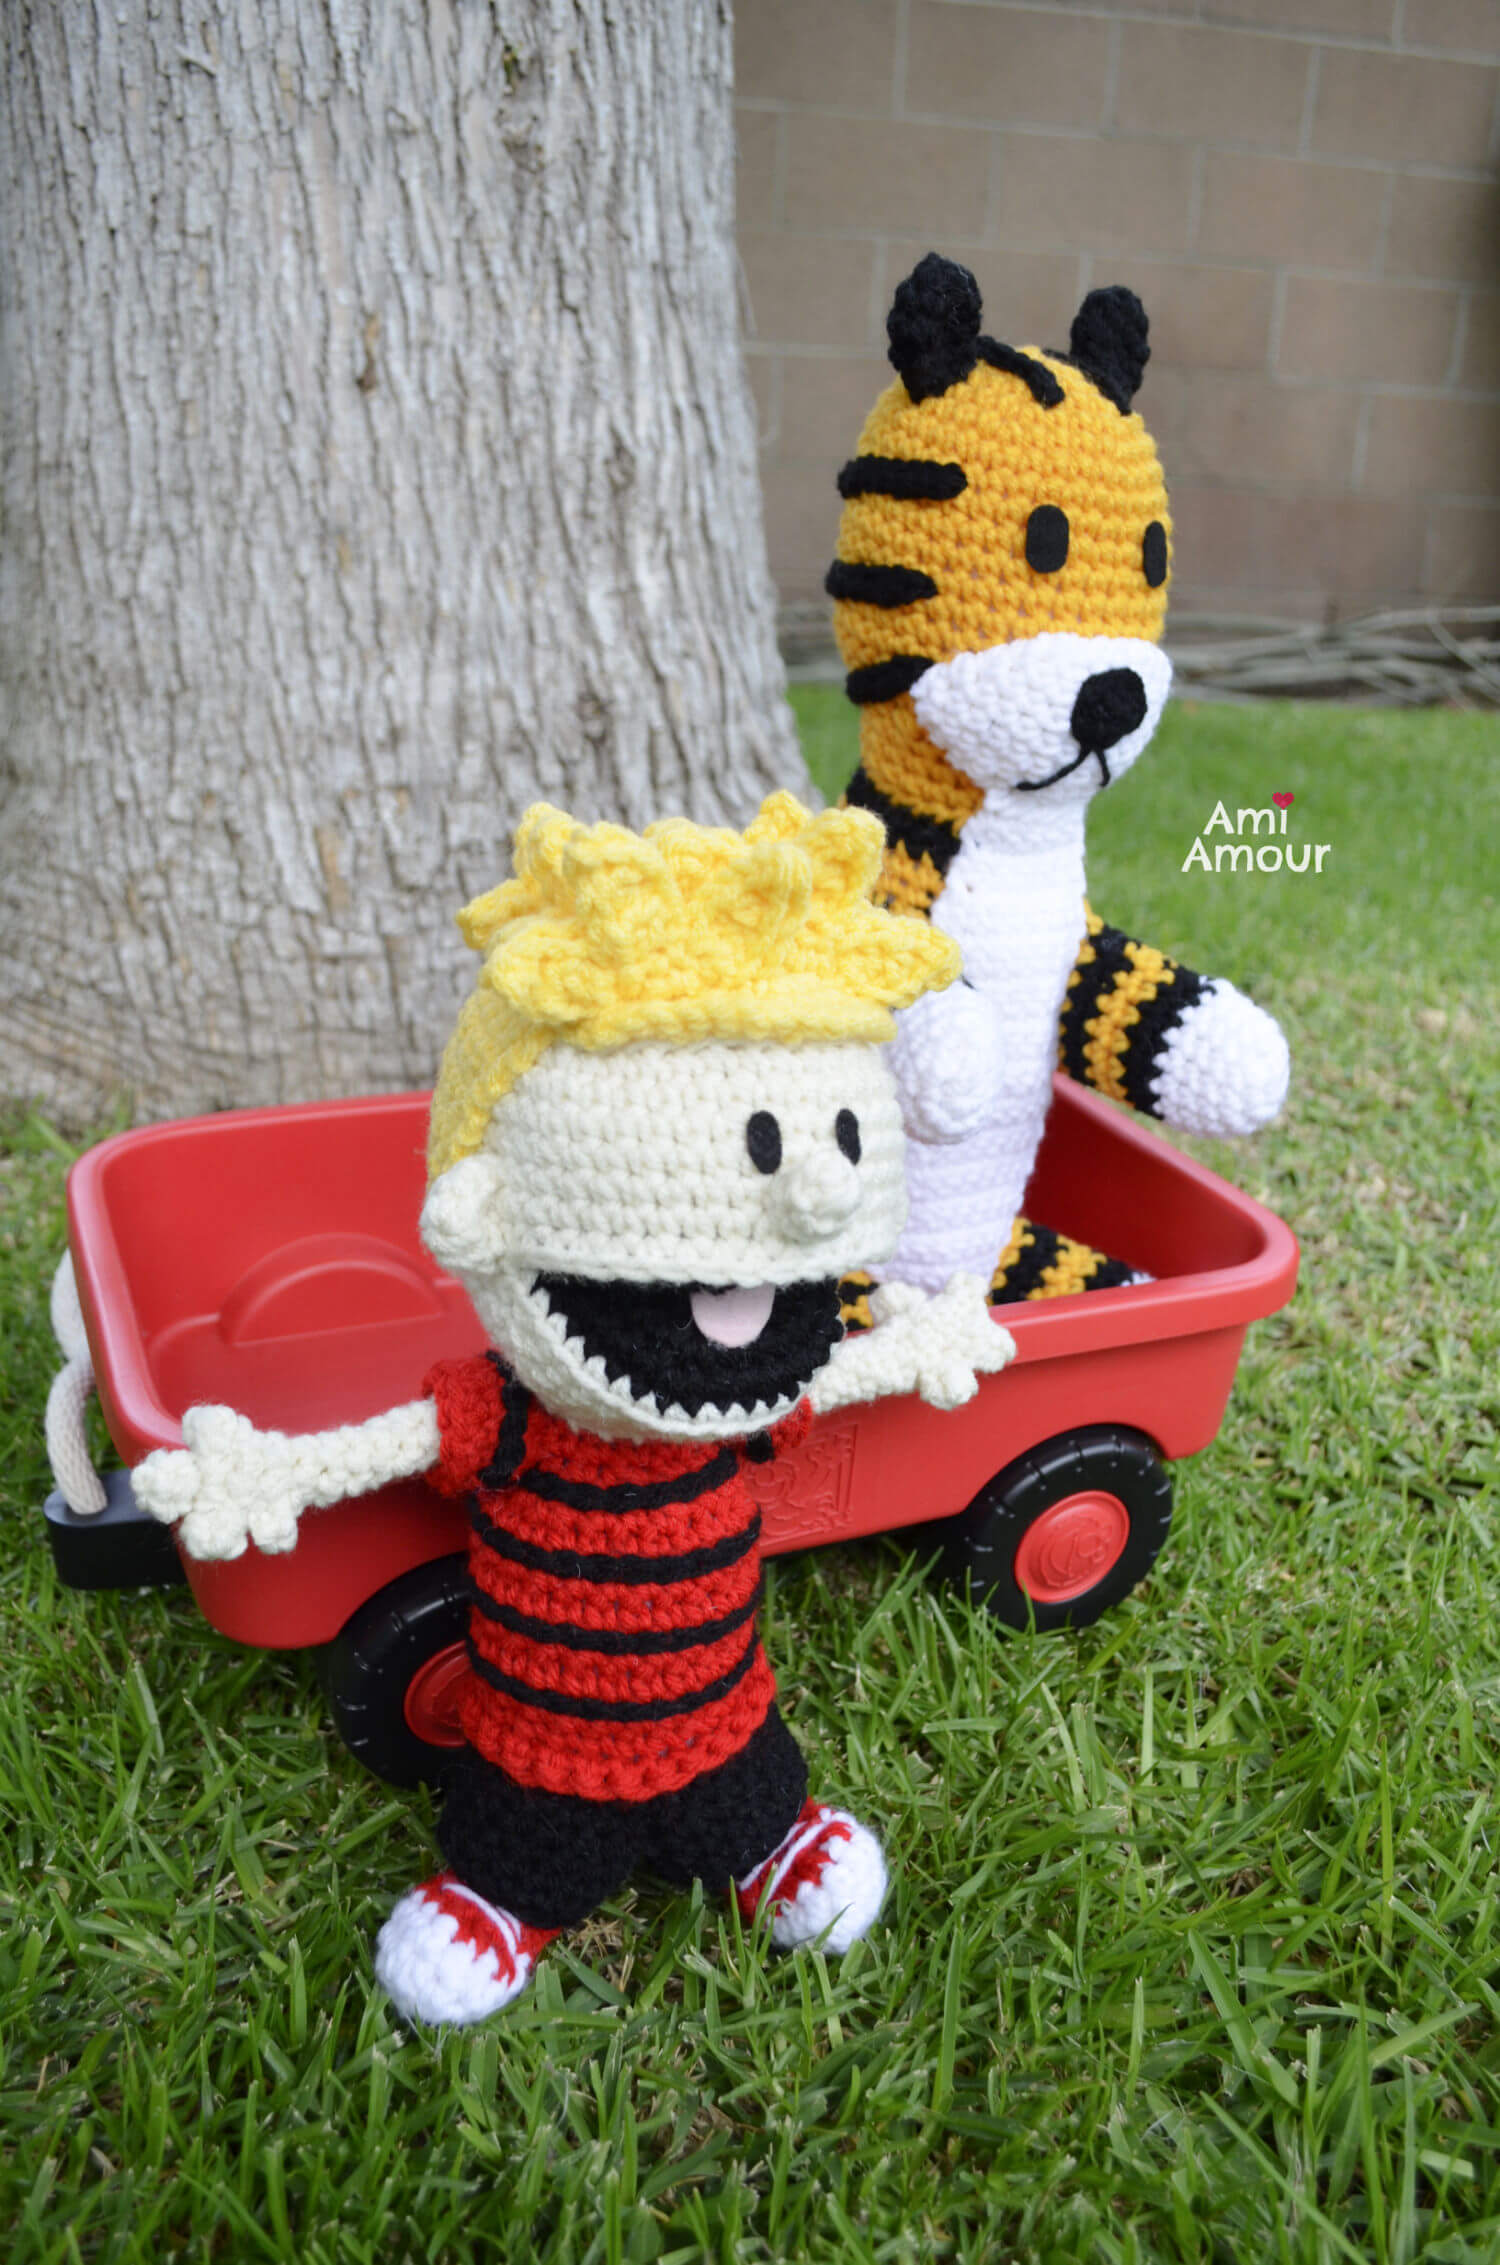 Calvin and Hobbes - Free Crochet Pattern